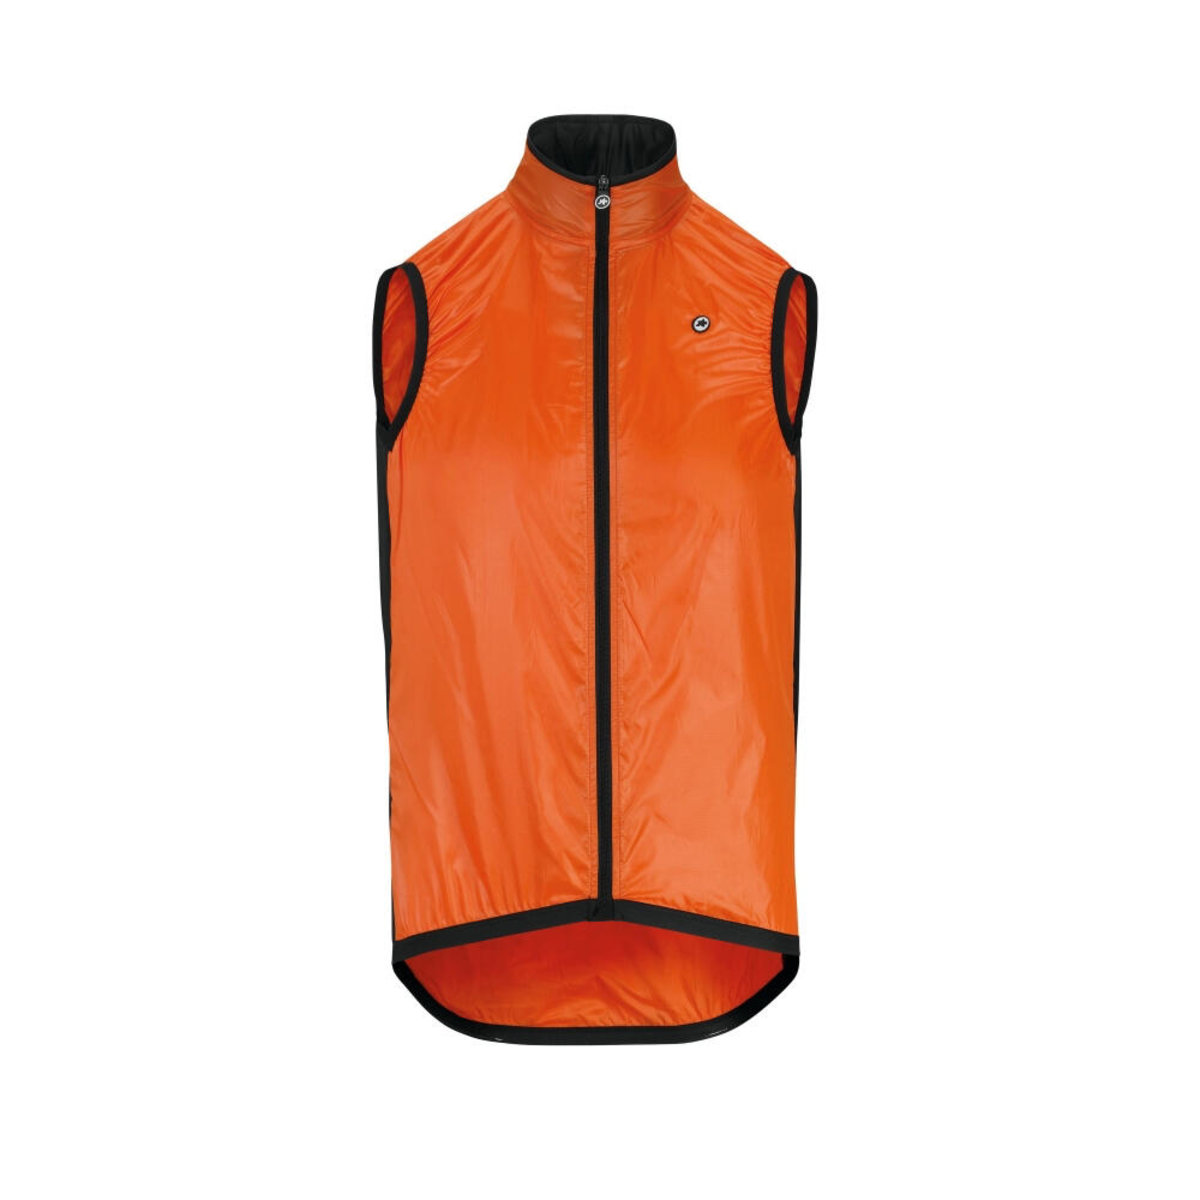 Жилетка ASSOS Mille GT Wind Vest Lolly Red, мужская, оранжевая, XLG